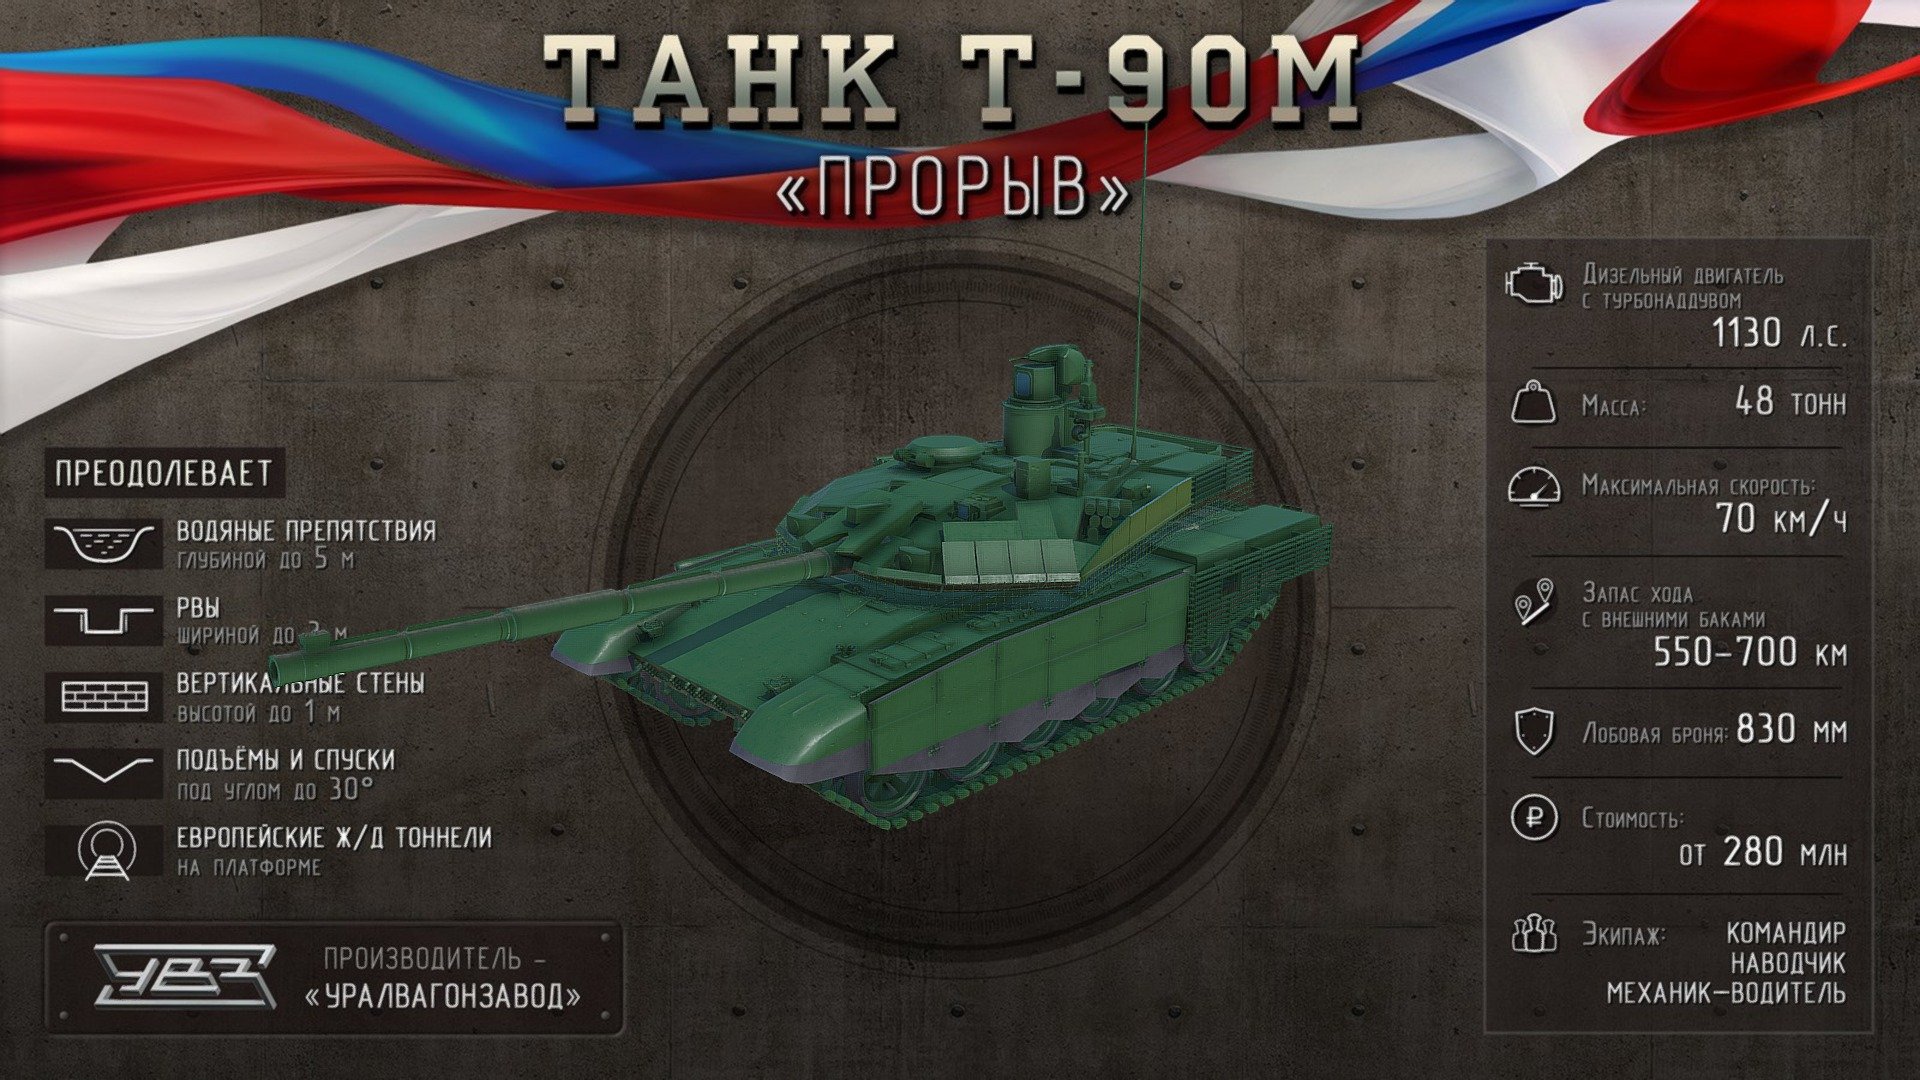 T-90_M - 3D model by IZ.RU 3d model